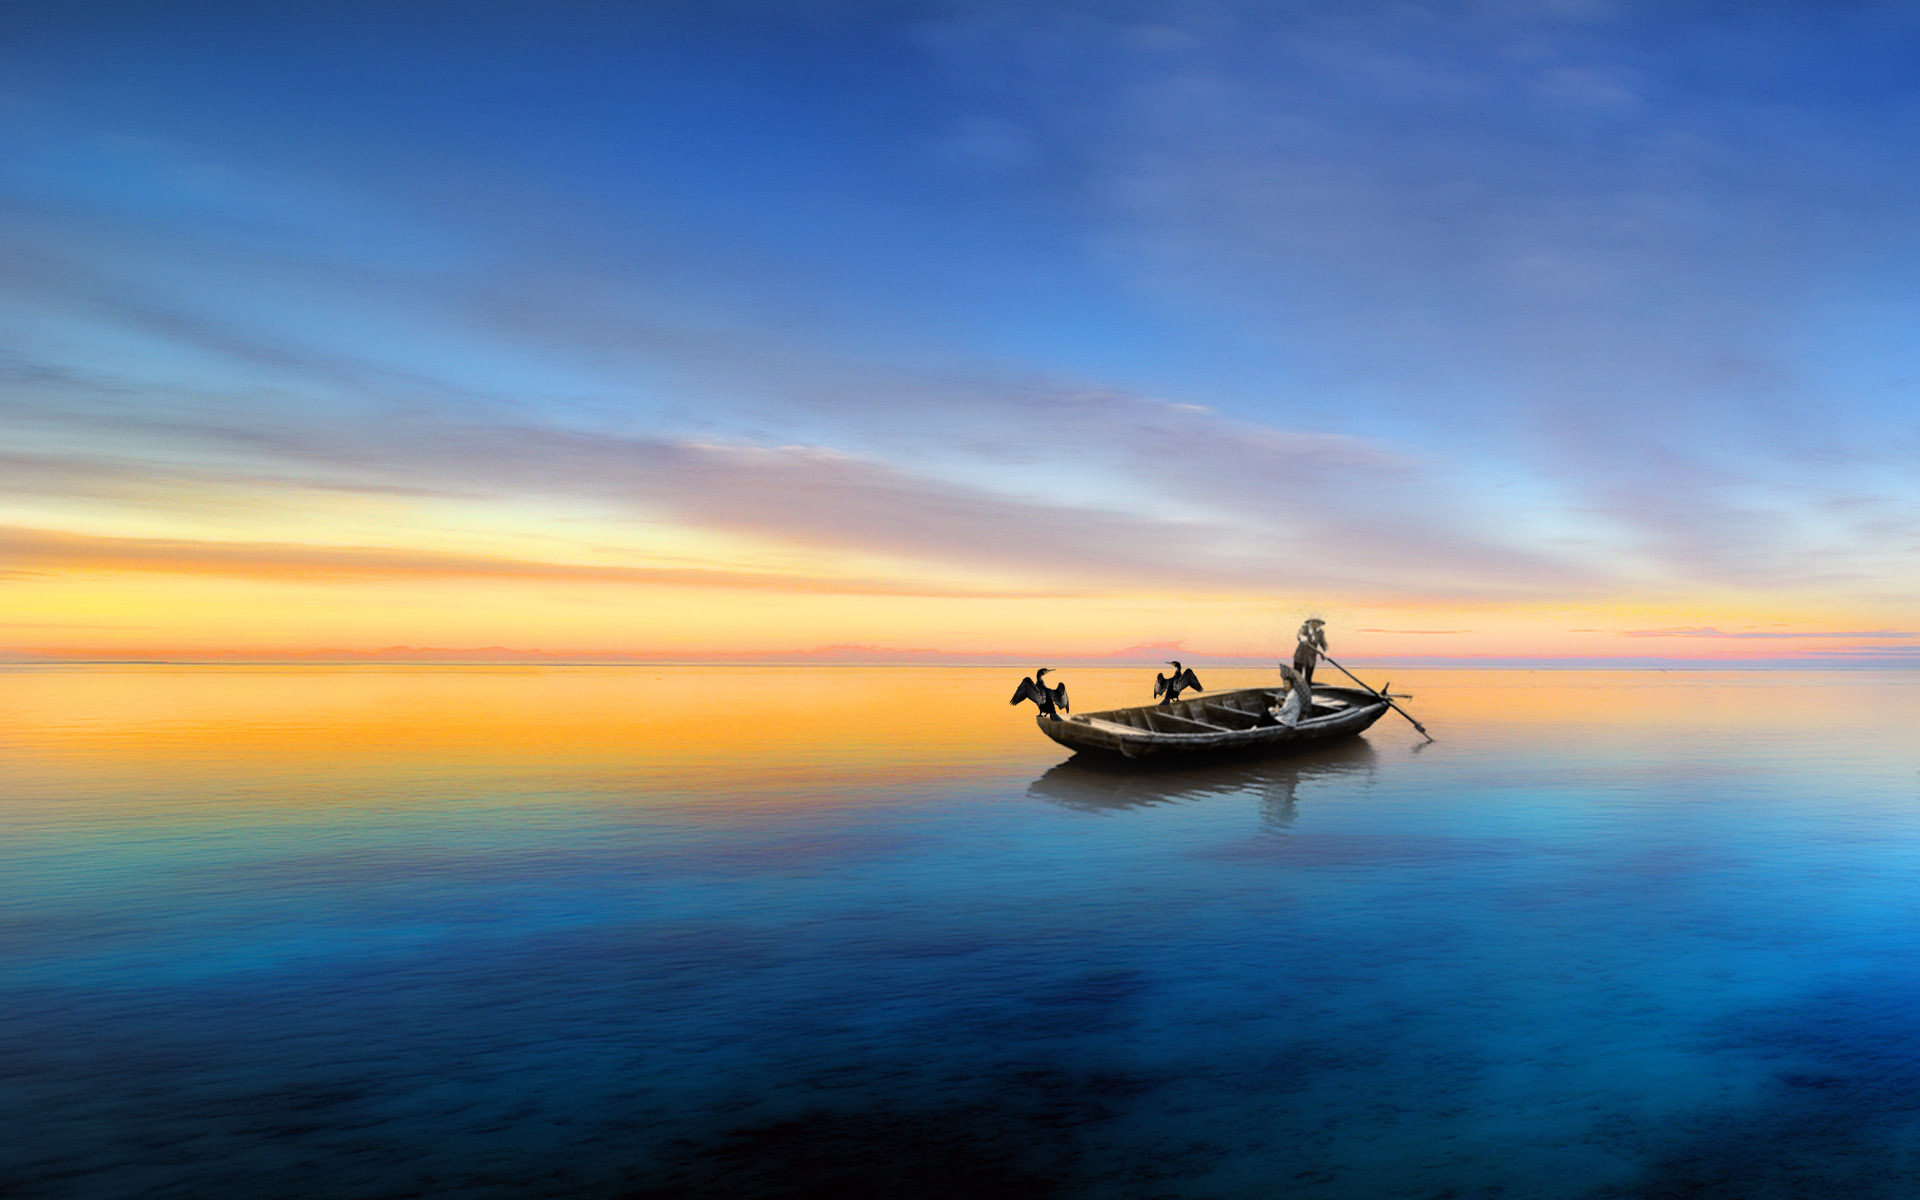 Wallpaper : boat, sunset, fishermen, water, nature, reflection, sky, Cast,  Tourism, river, Vietnam, fishing, fisherman, hue, net 1615x1382 - - 852911  - HD Wallpapers - WallHere